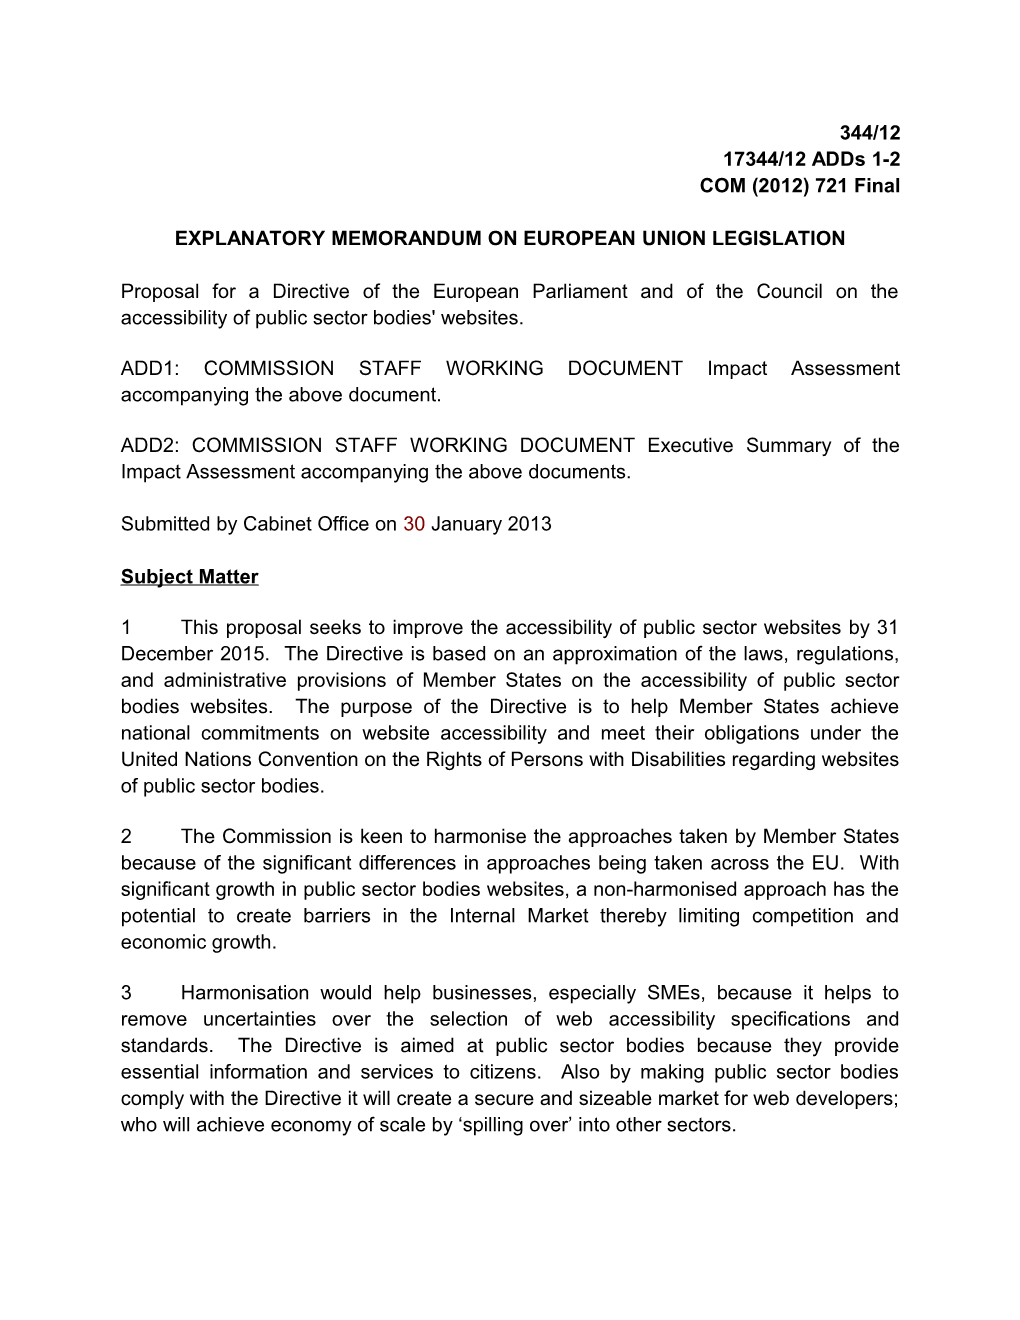 20121220 Revised EU Explanatory Note (Web Accessibility)